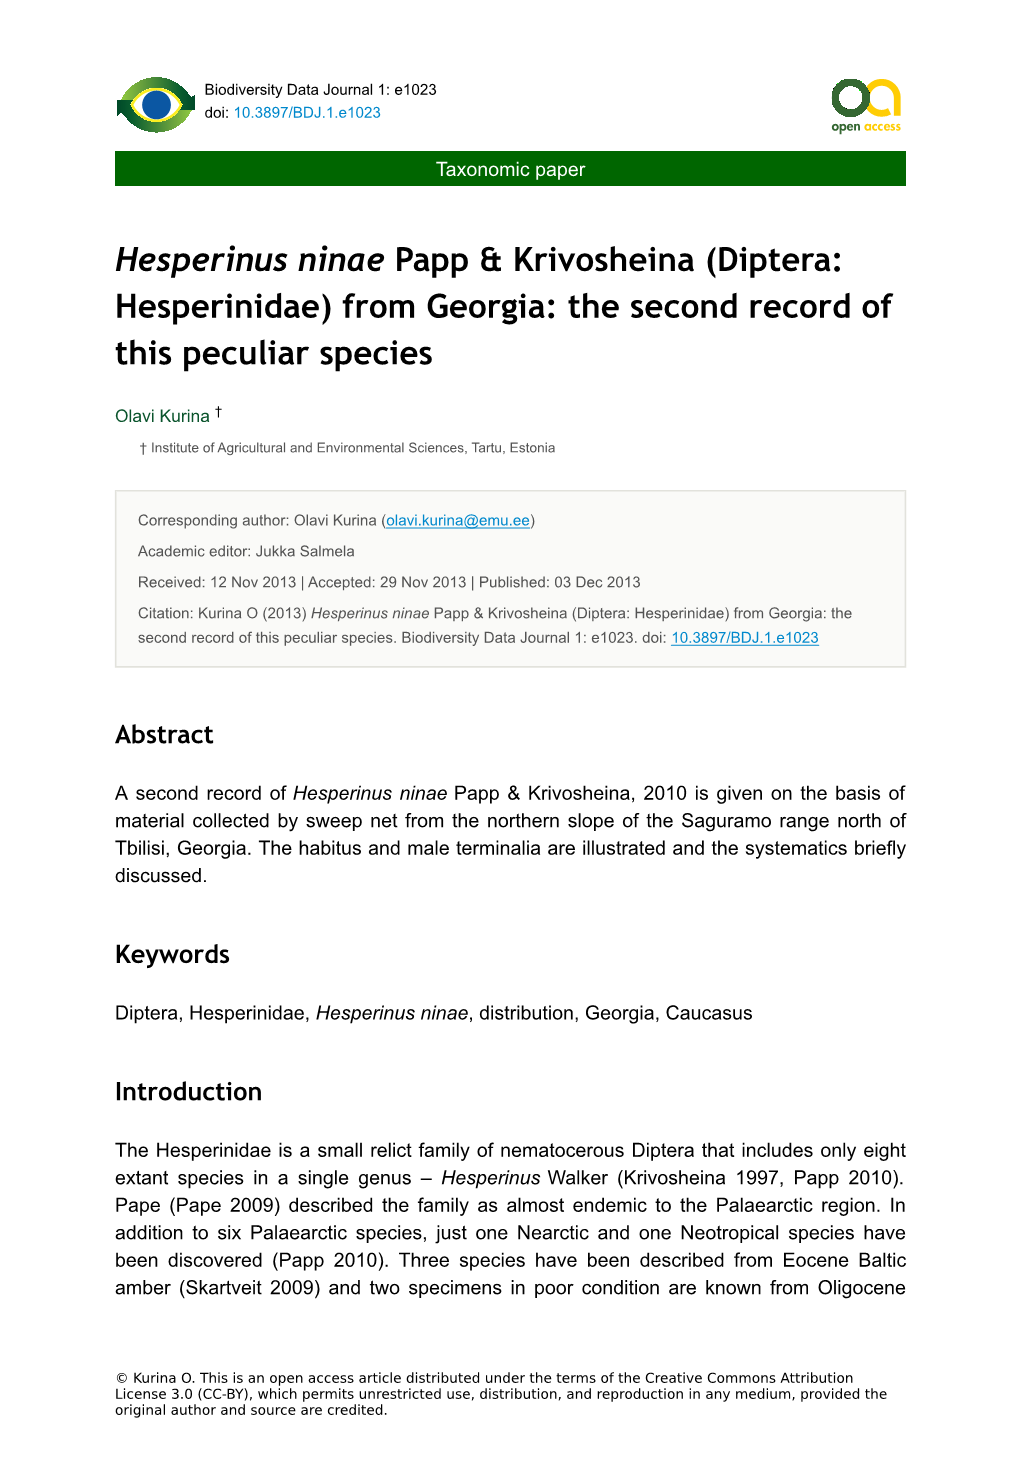 Hesperinus Ninae Papp & Krivosheina (Diptera